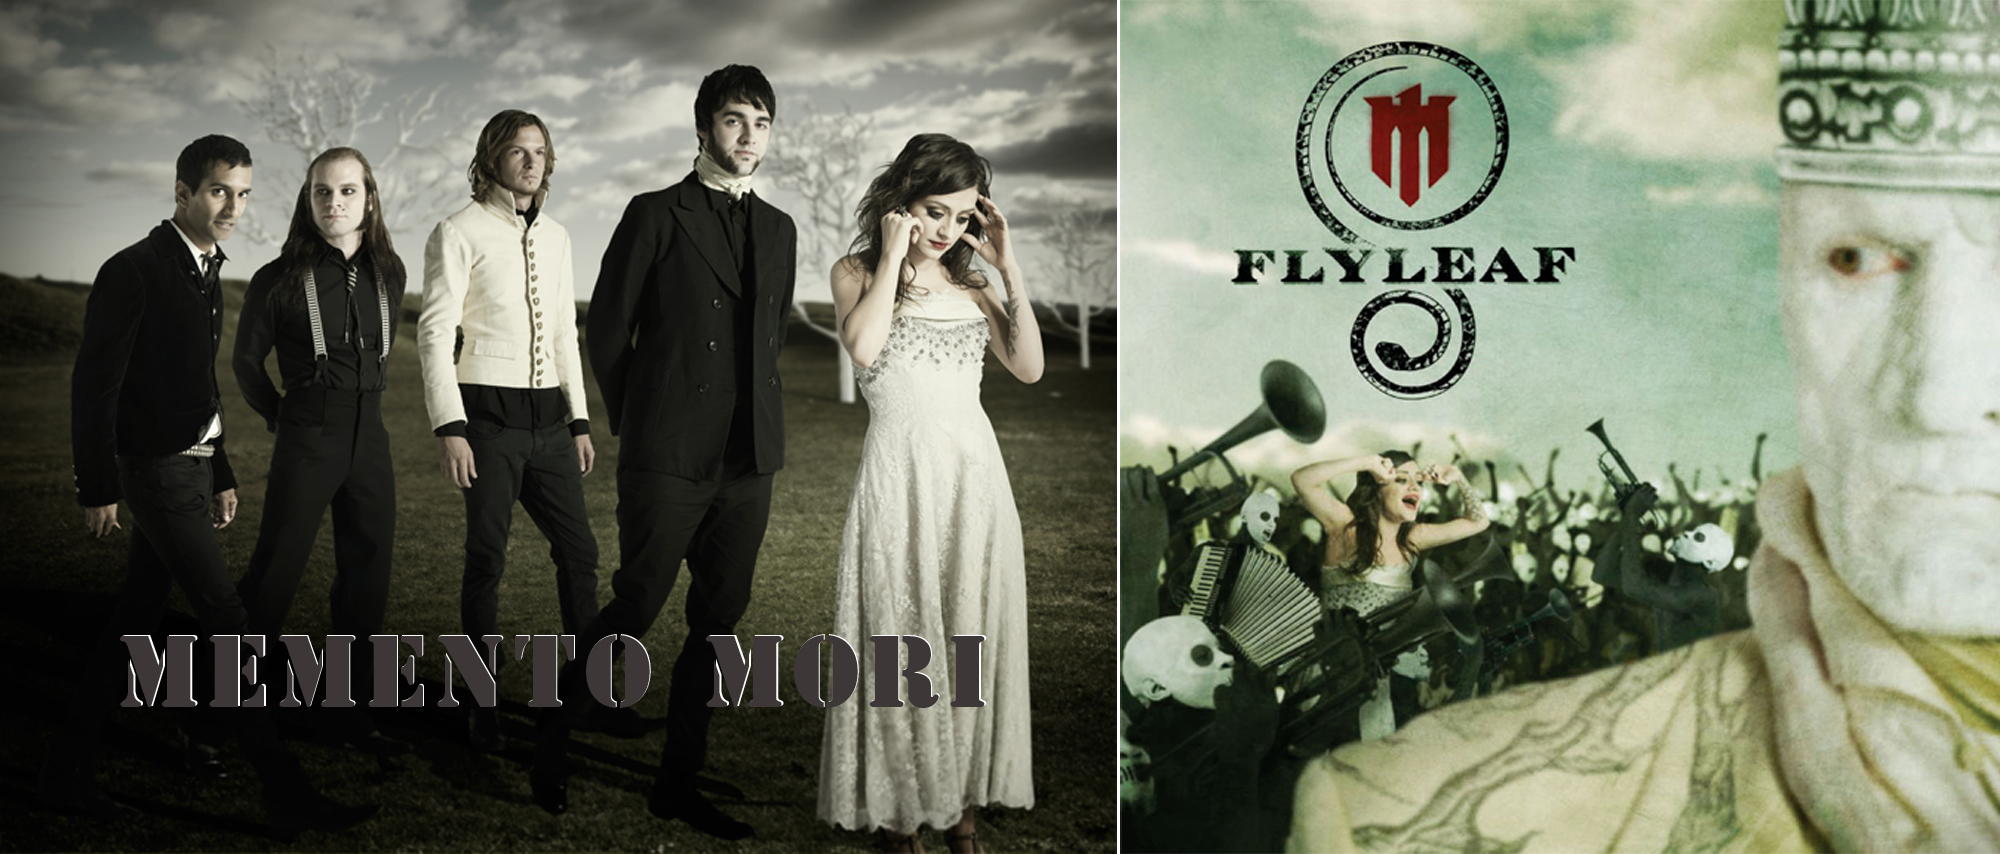 Flyleaf: Memento Mori Album Artwork